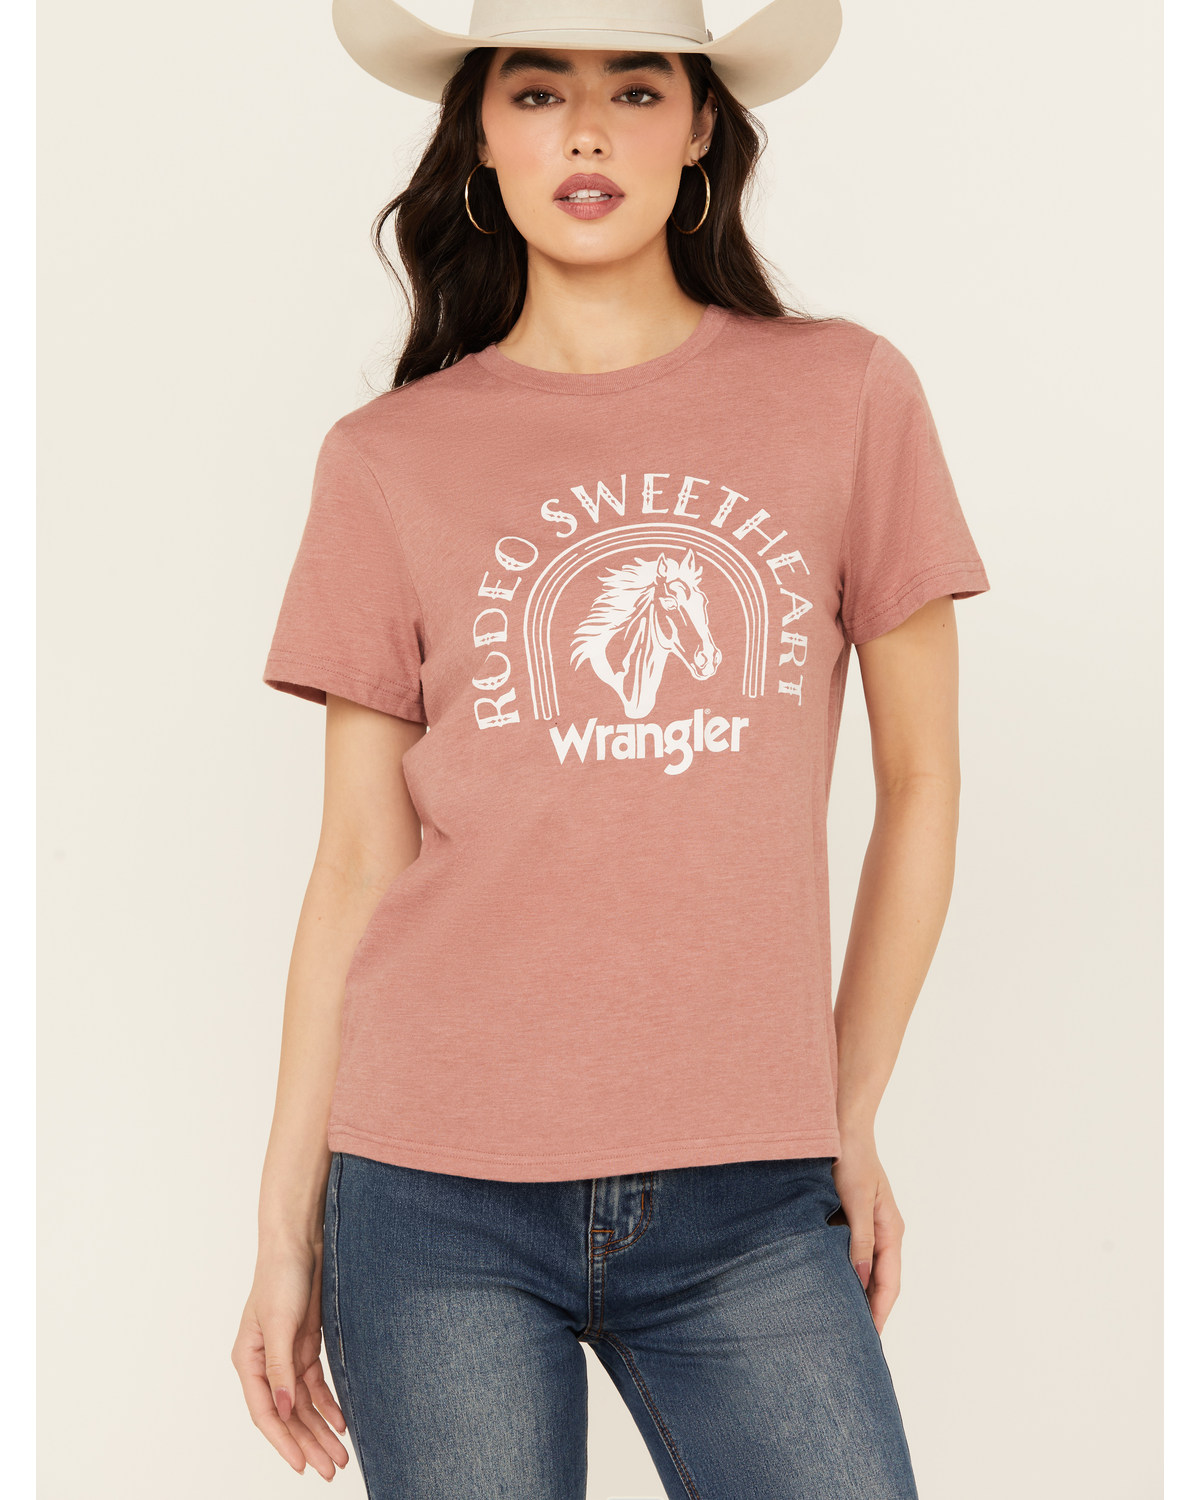 Wrangler Women's Rodeo Sweetheart Short Sleeve Graphic Tee